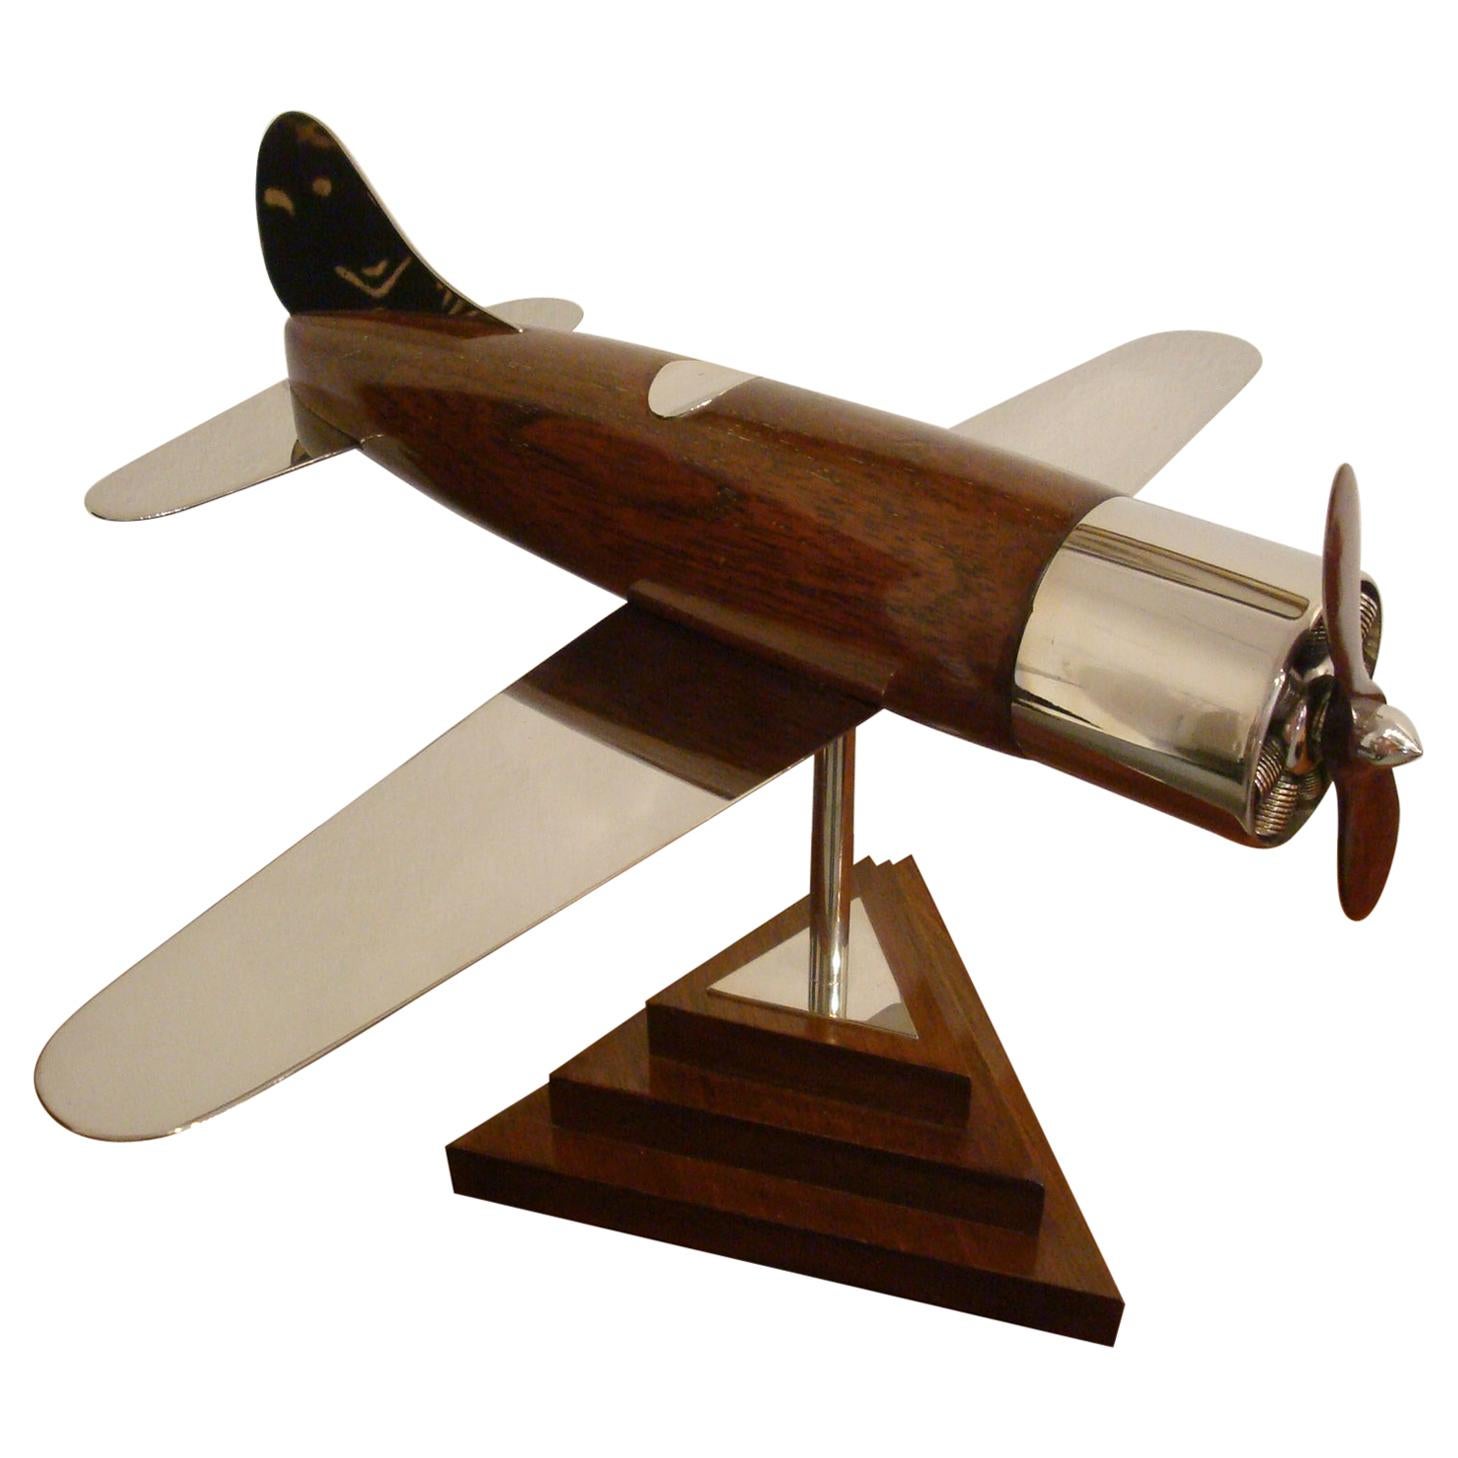 20th Century, Art Deco Streamline Airplane Wooden Model Sculpture, 1930s